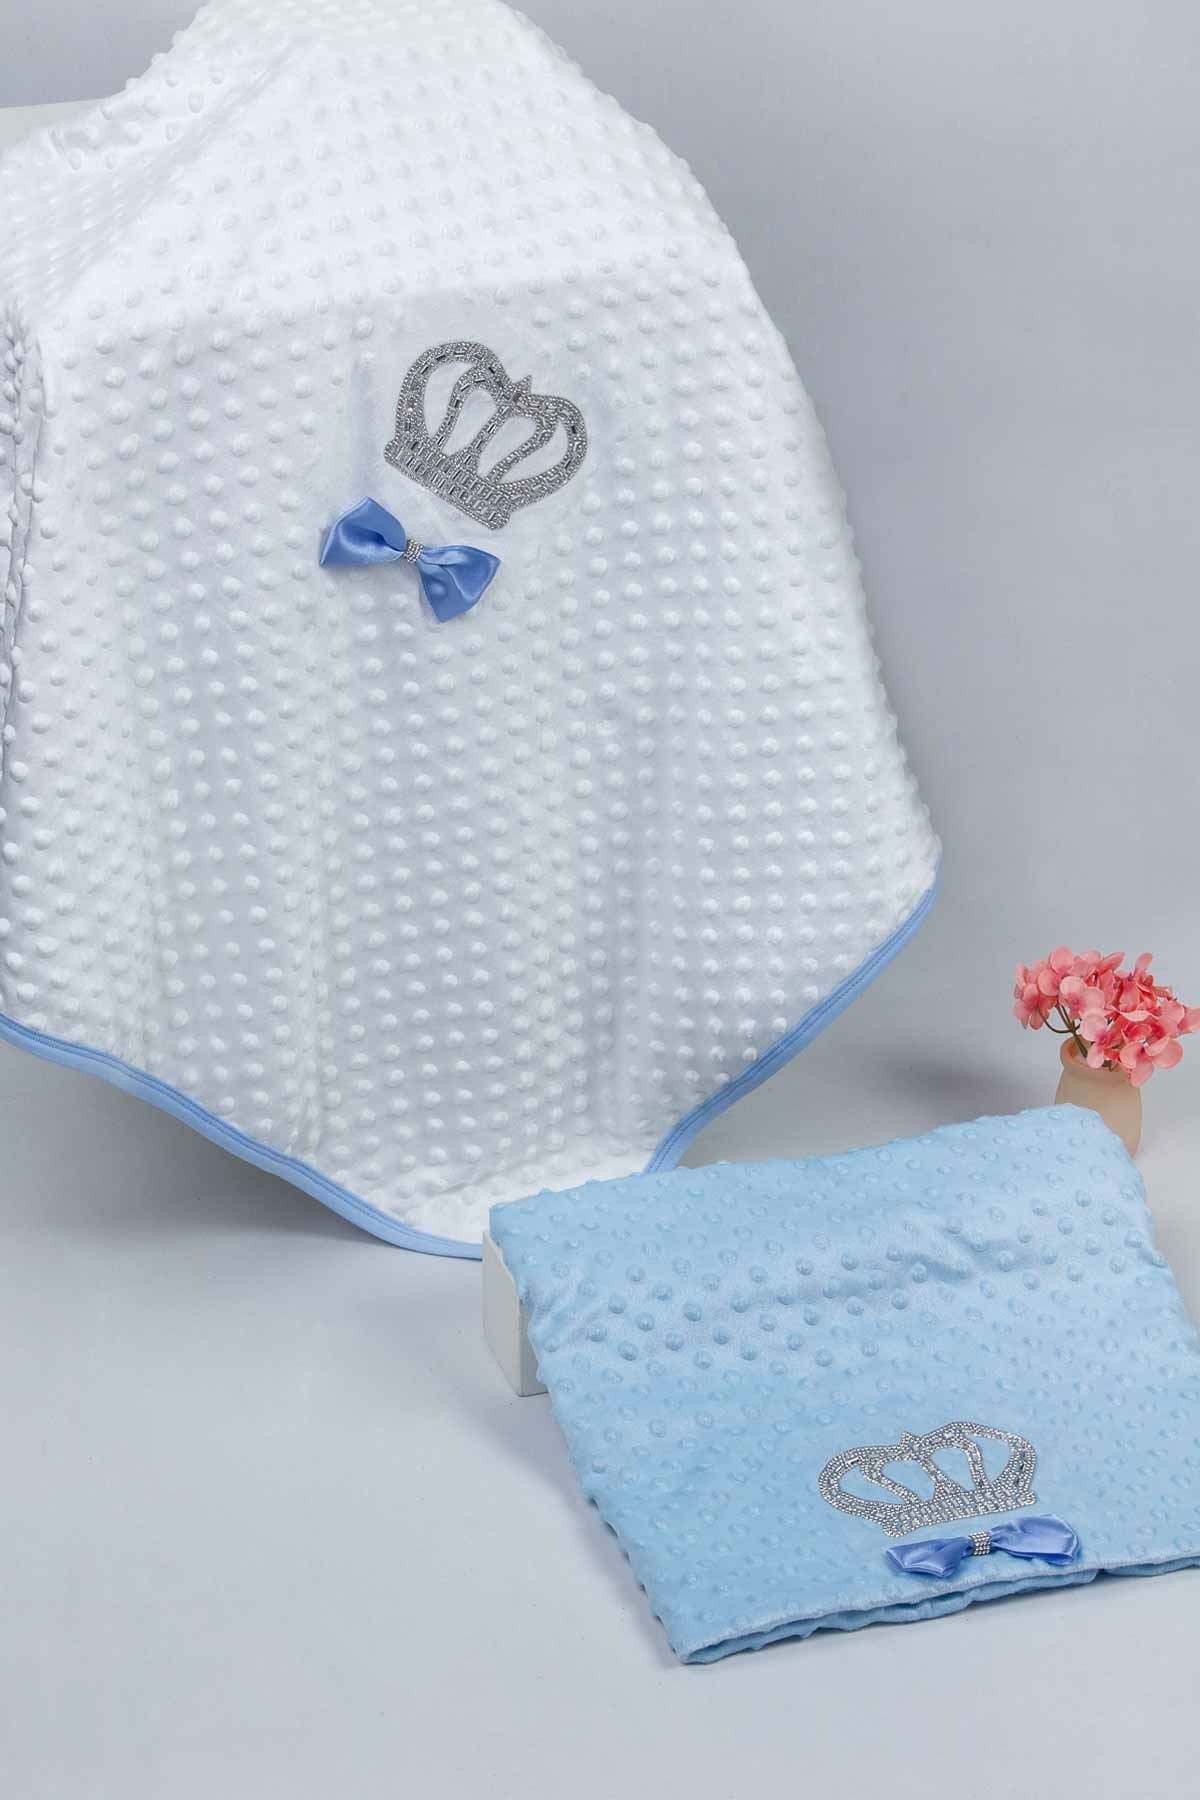 White 85 X90 cm Boy Babies Blanket King Queen Boys Baby Newborn Crown CottonEmbossed Ultra Soft Antibacterial Infants Models